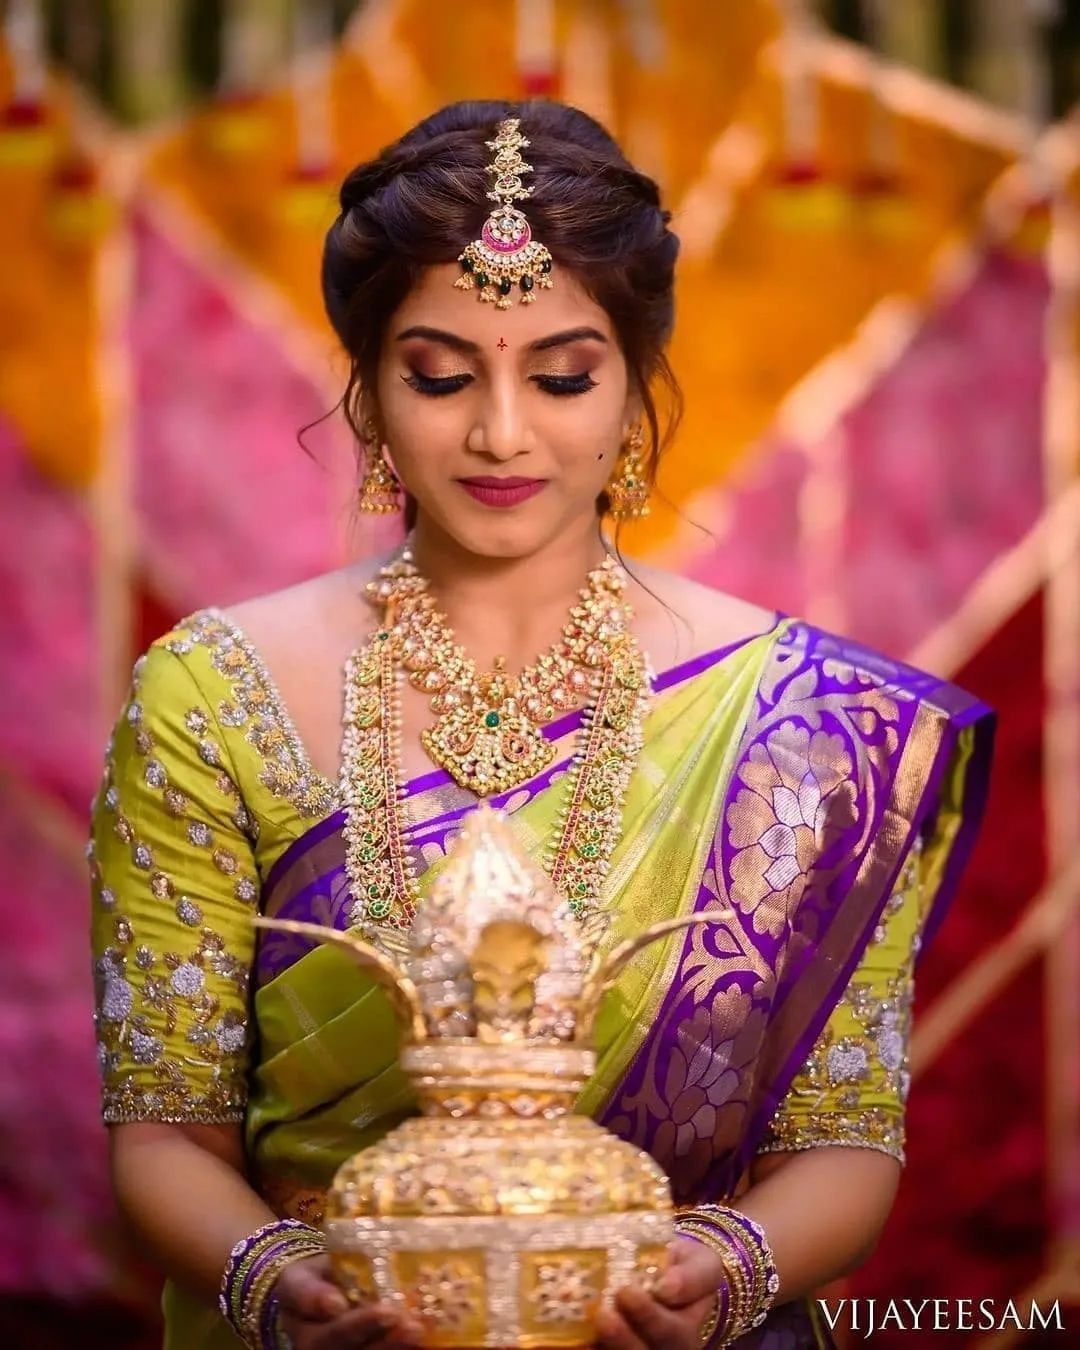 Asian wedding brie inspiration makeup loos | Trendy wedding hairstyles,  Bridal hair buns, Indian bridal makeup